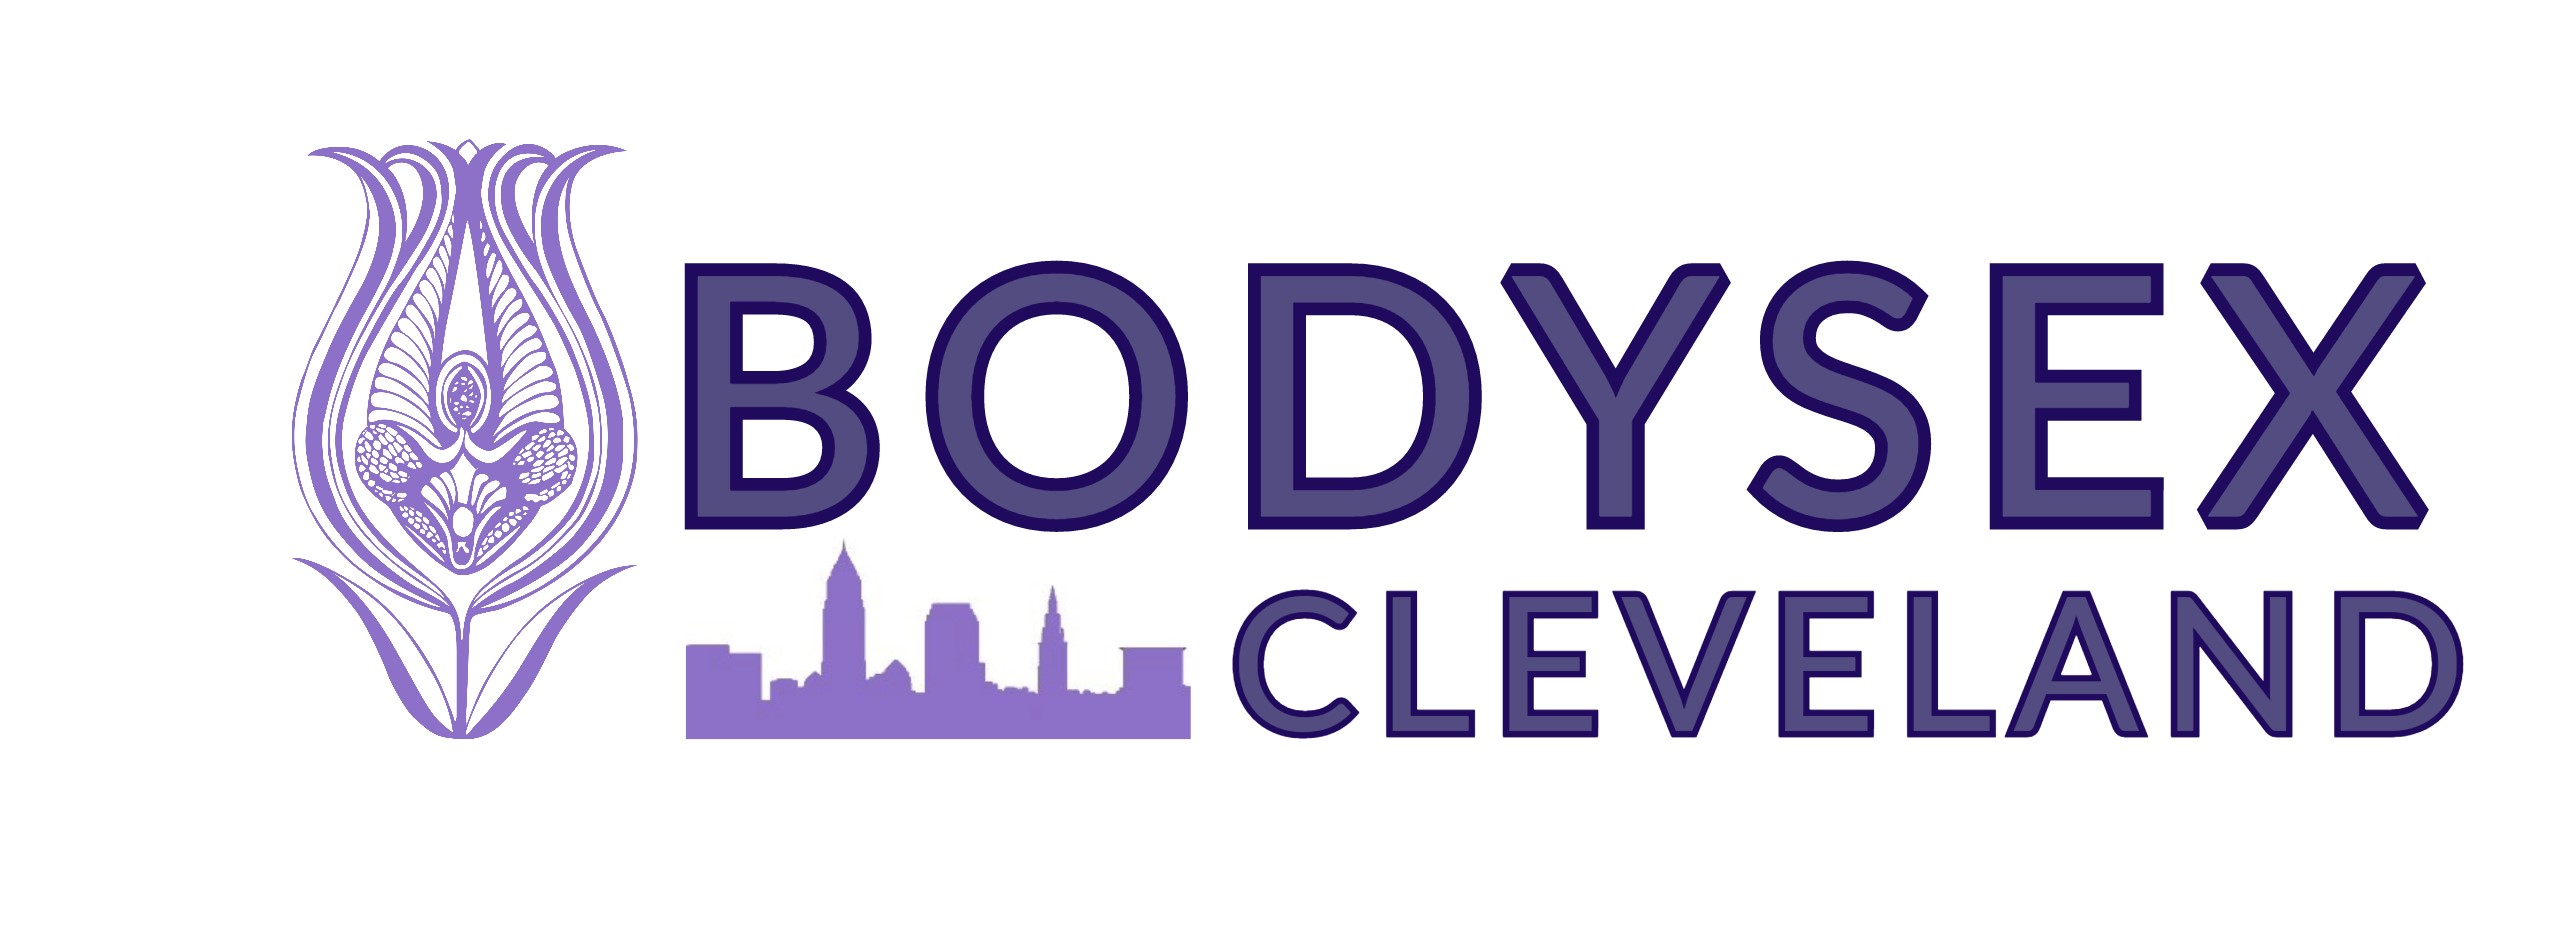 Bodysex Cleveland